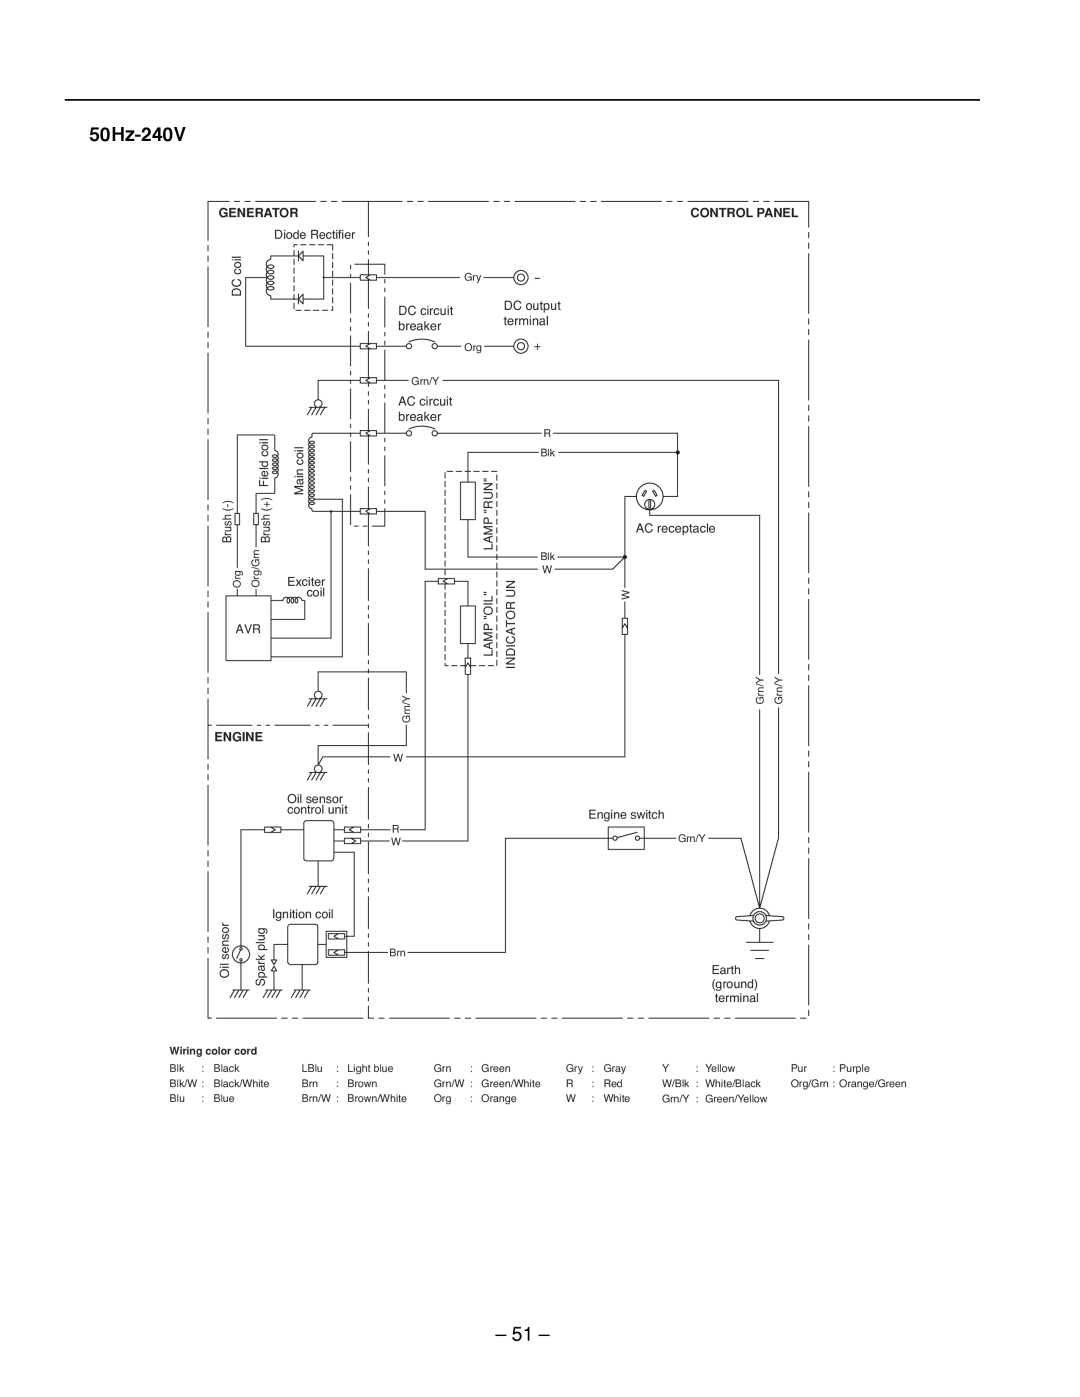 Subaru R1100 service manual 50Hz-240V, Generator, DC coil, Engine, DC circuit, terminal, breaker, AC circuit, Control Panel 